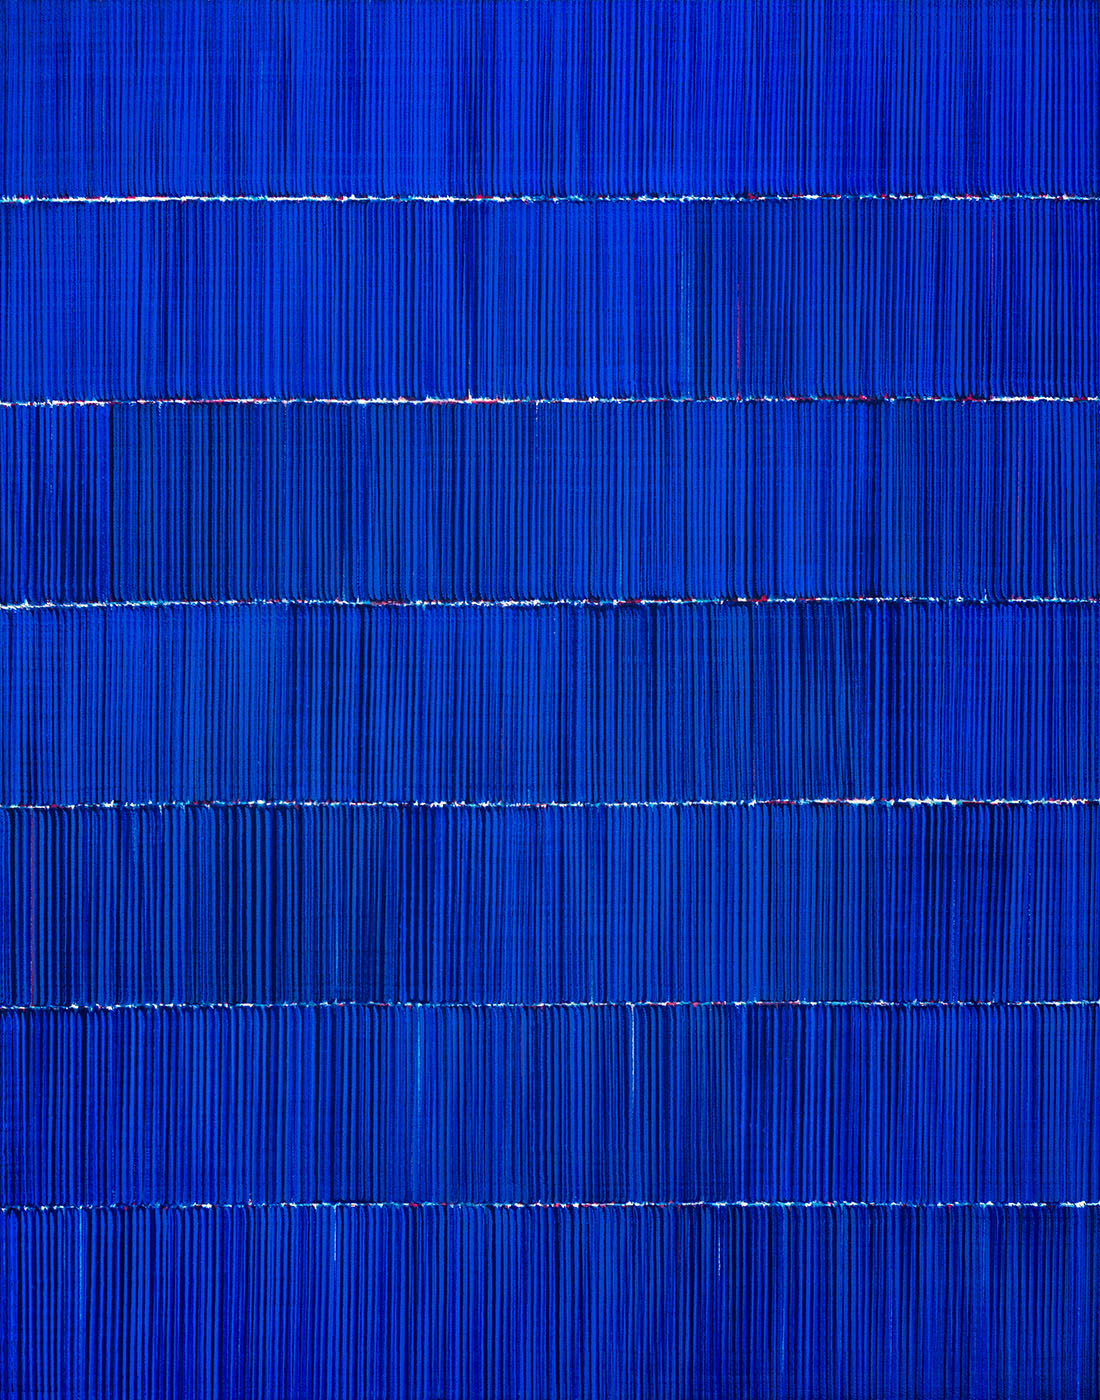 Nikola Dimitrov, FarbKlangBlau II, 2019, Pigmente, Bindemittel auf Leinwand, 140 × 110 cm